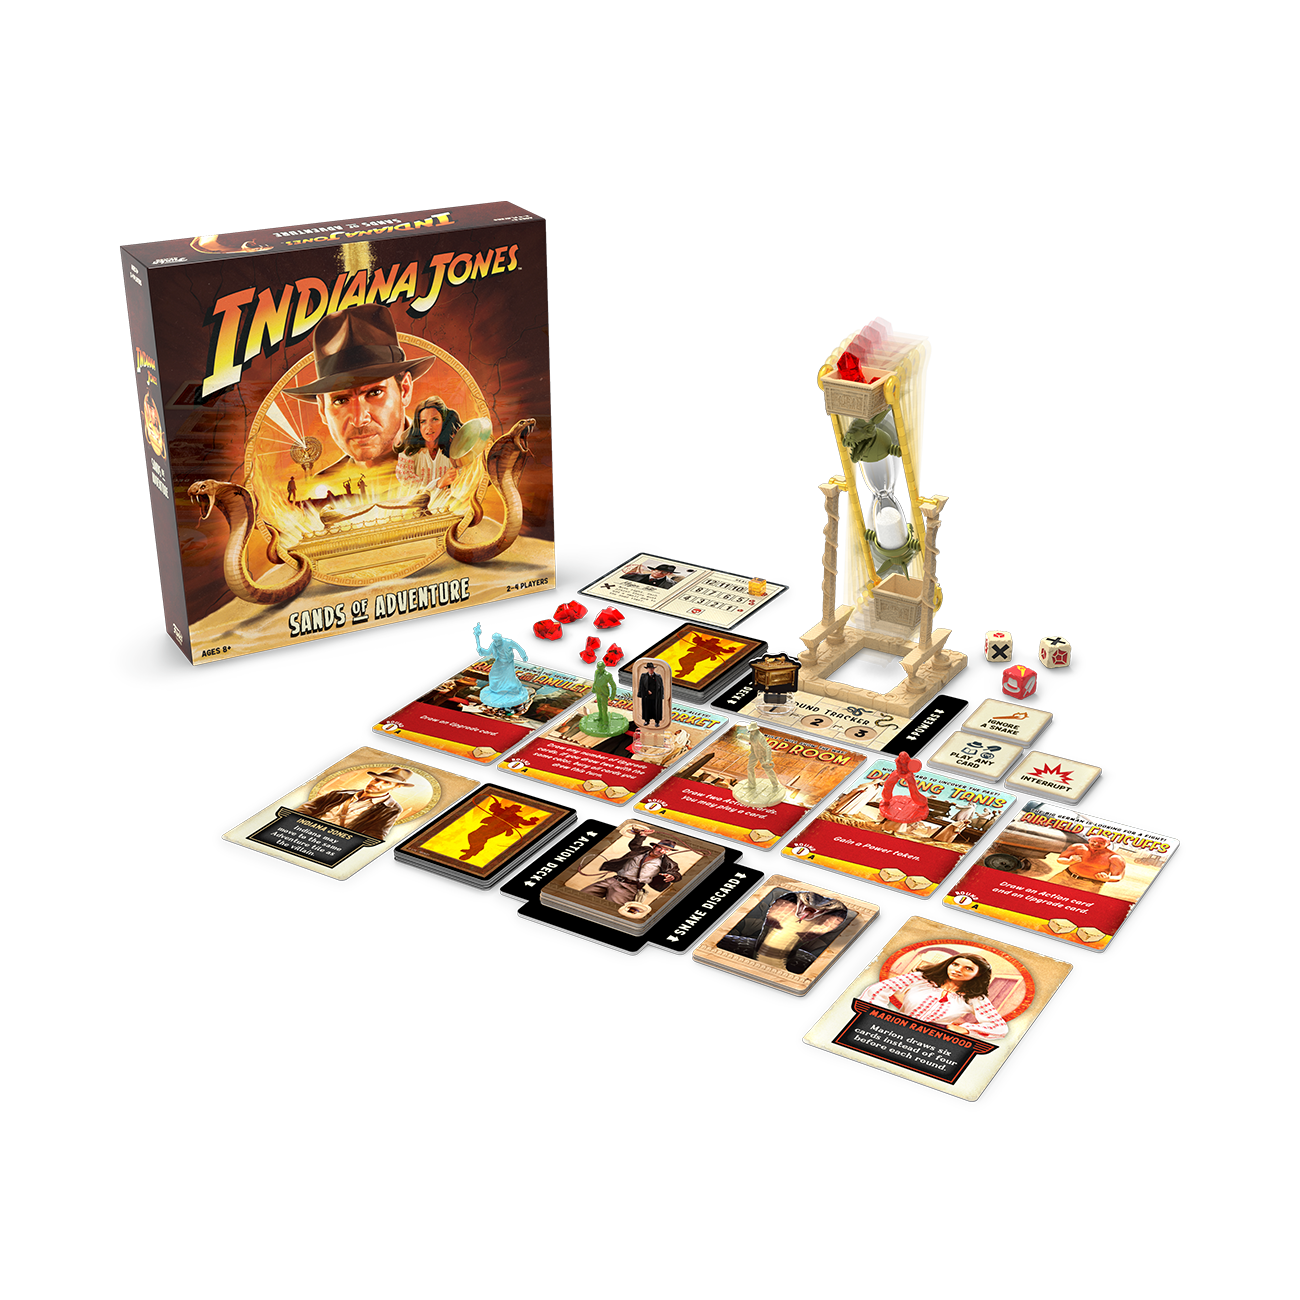 Indiana Jones: Sands of Adventure box and contents